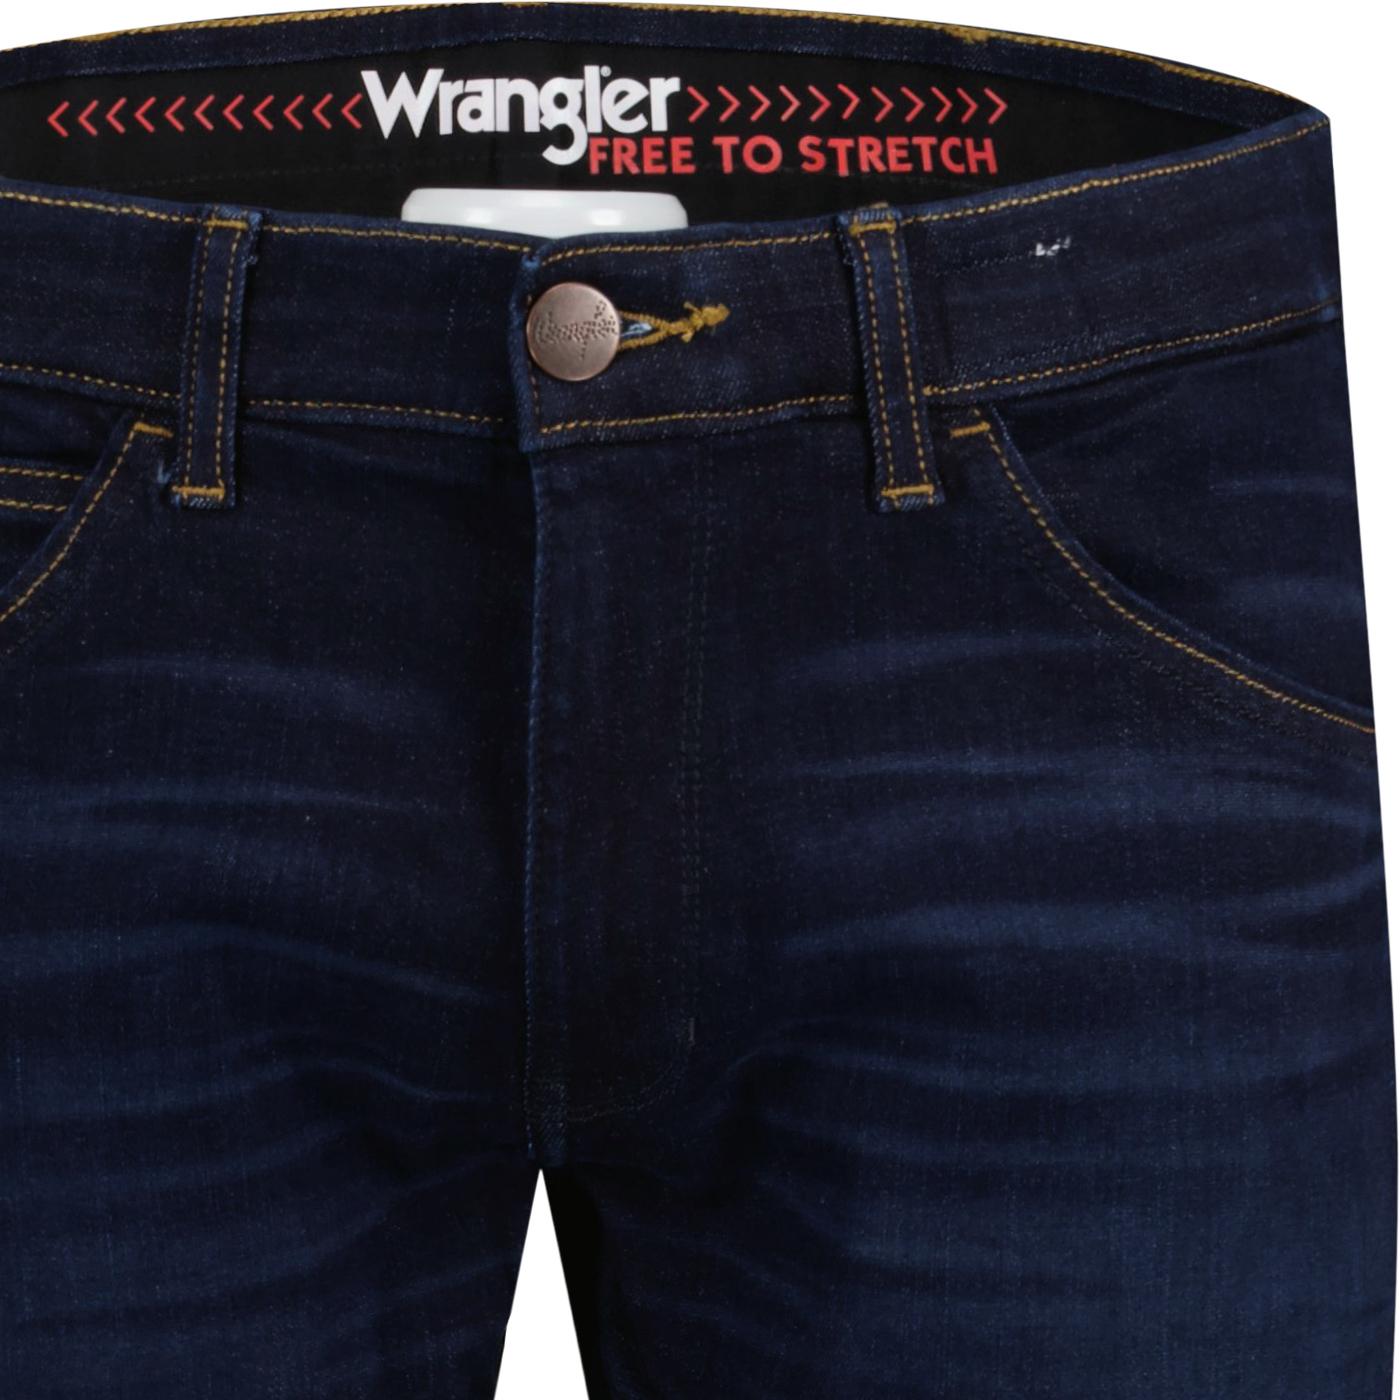 Bryson Wrangler Retro Mod Skinny Jeans In The Outlaw 